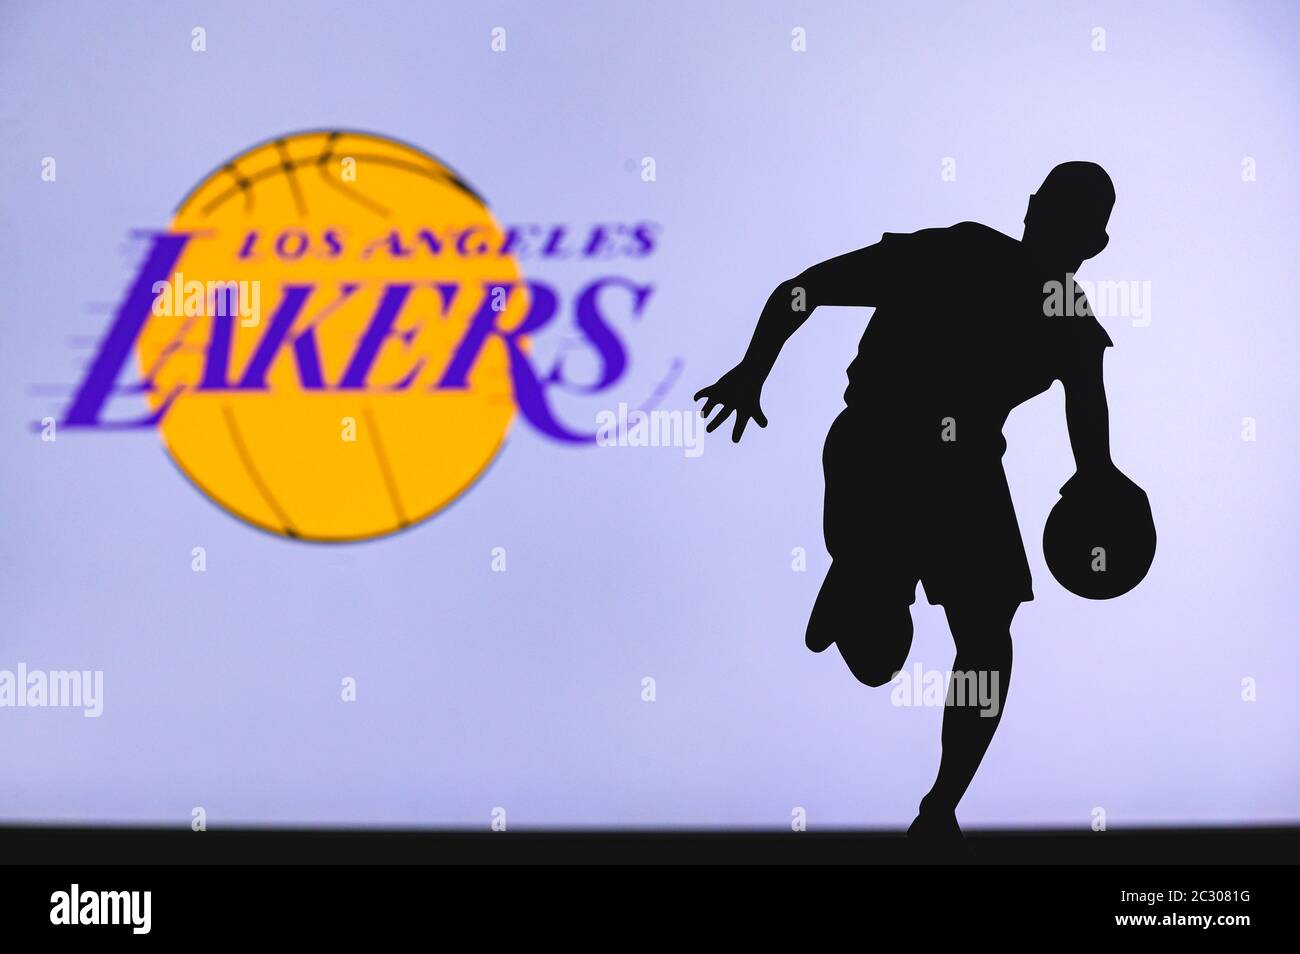 Wallpaper wallpaper, sport, logo, basketball, NBA, Los Angeles Lakers  images for desktop, section спорт - download